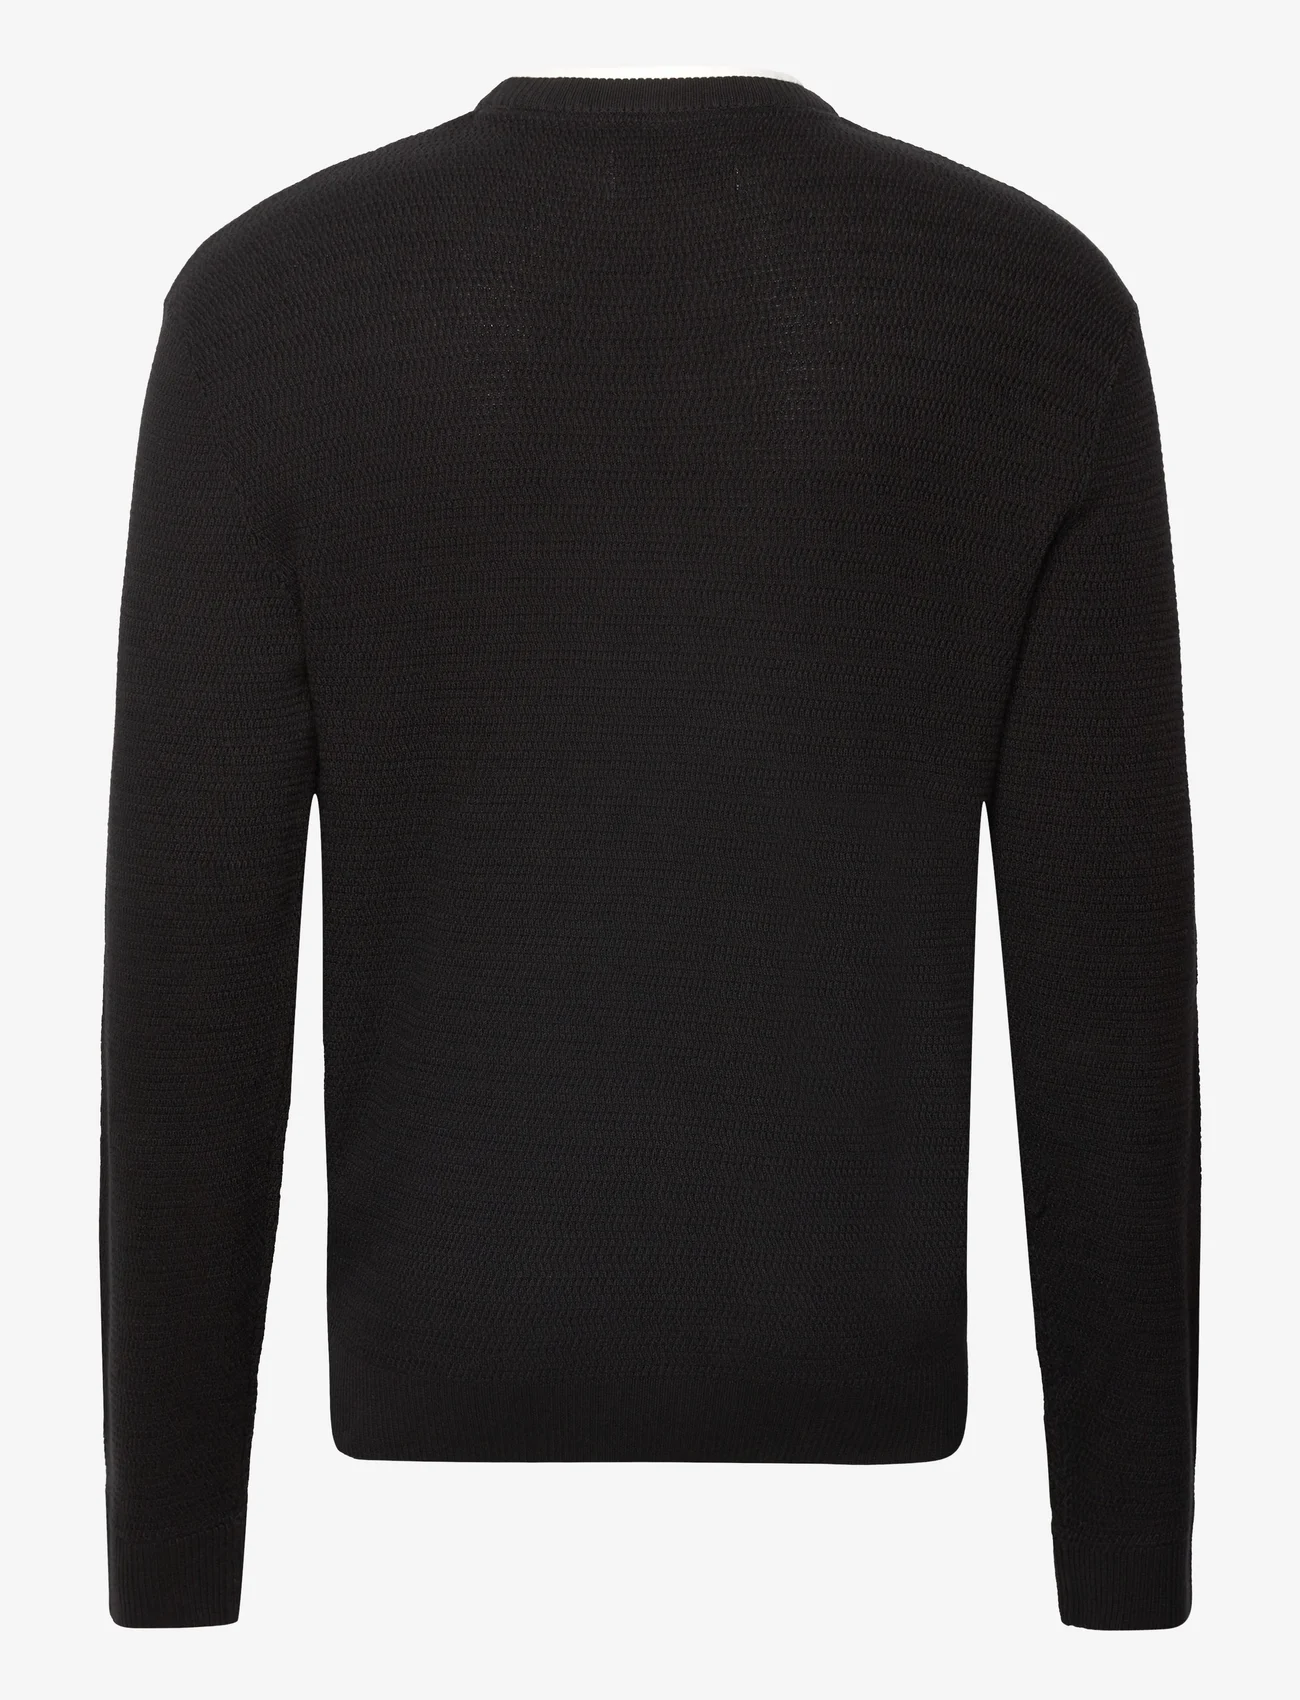 Tom Tailor - structured doublelayer knit - rundhals - black - 1